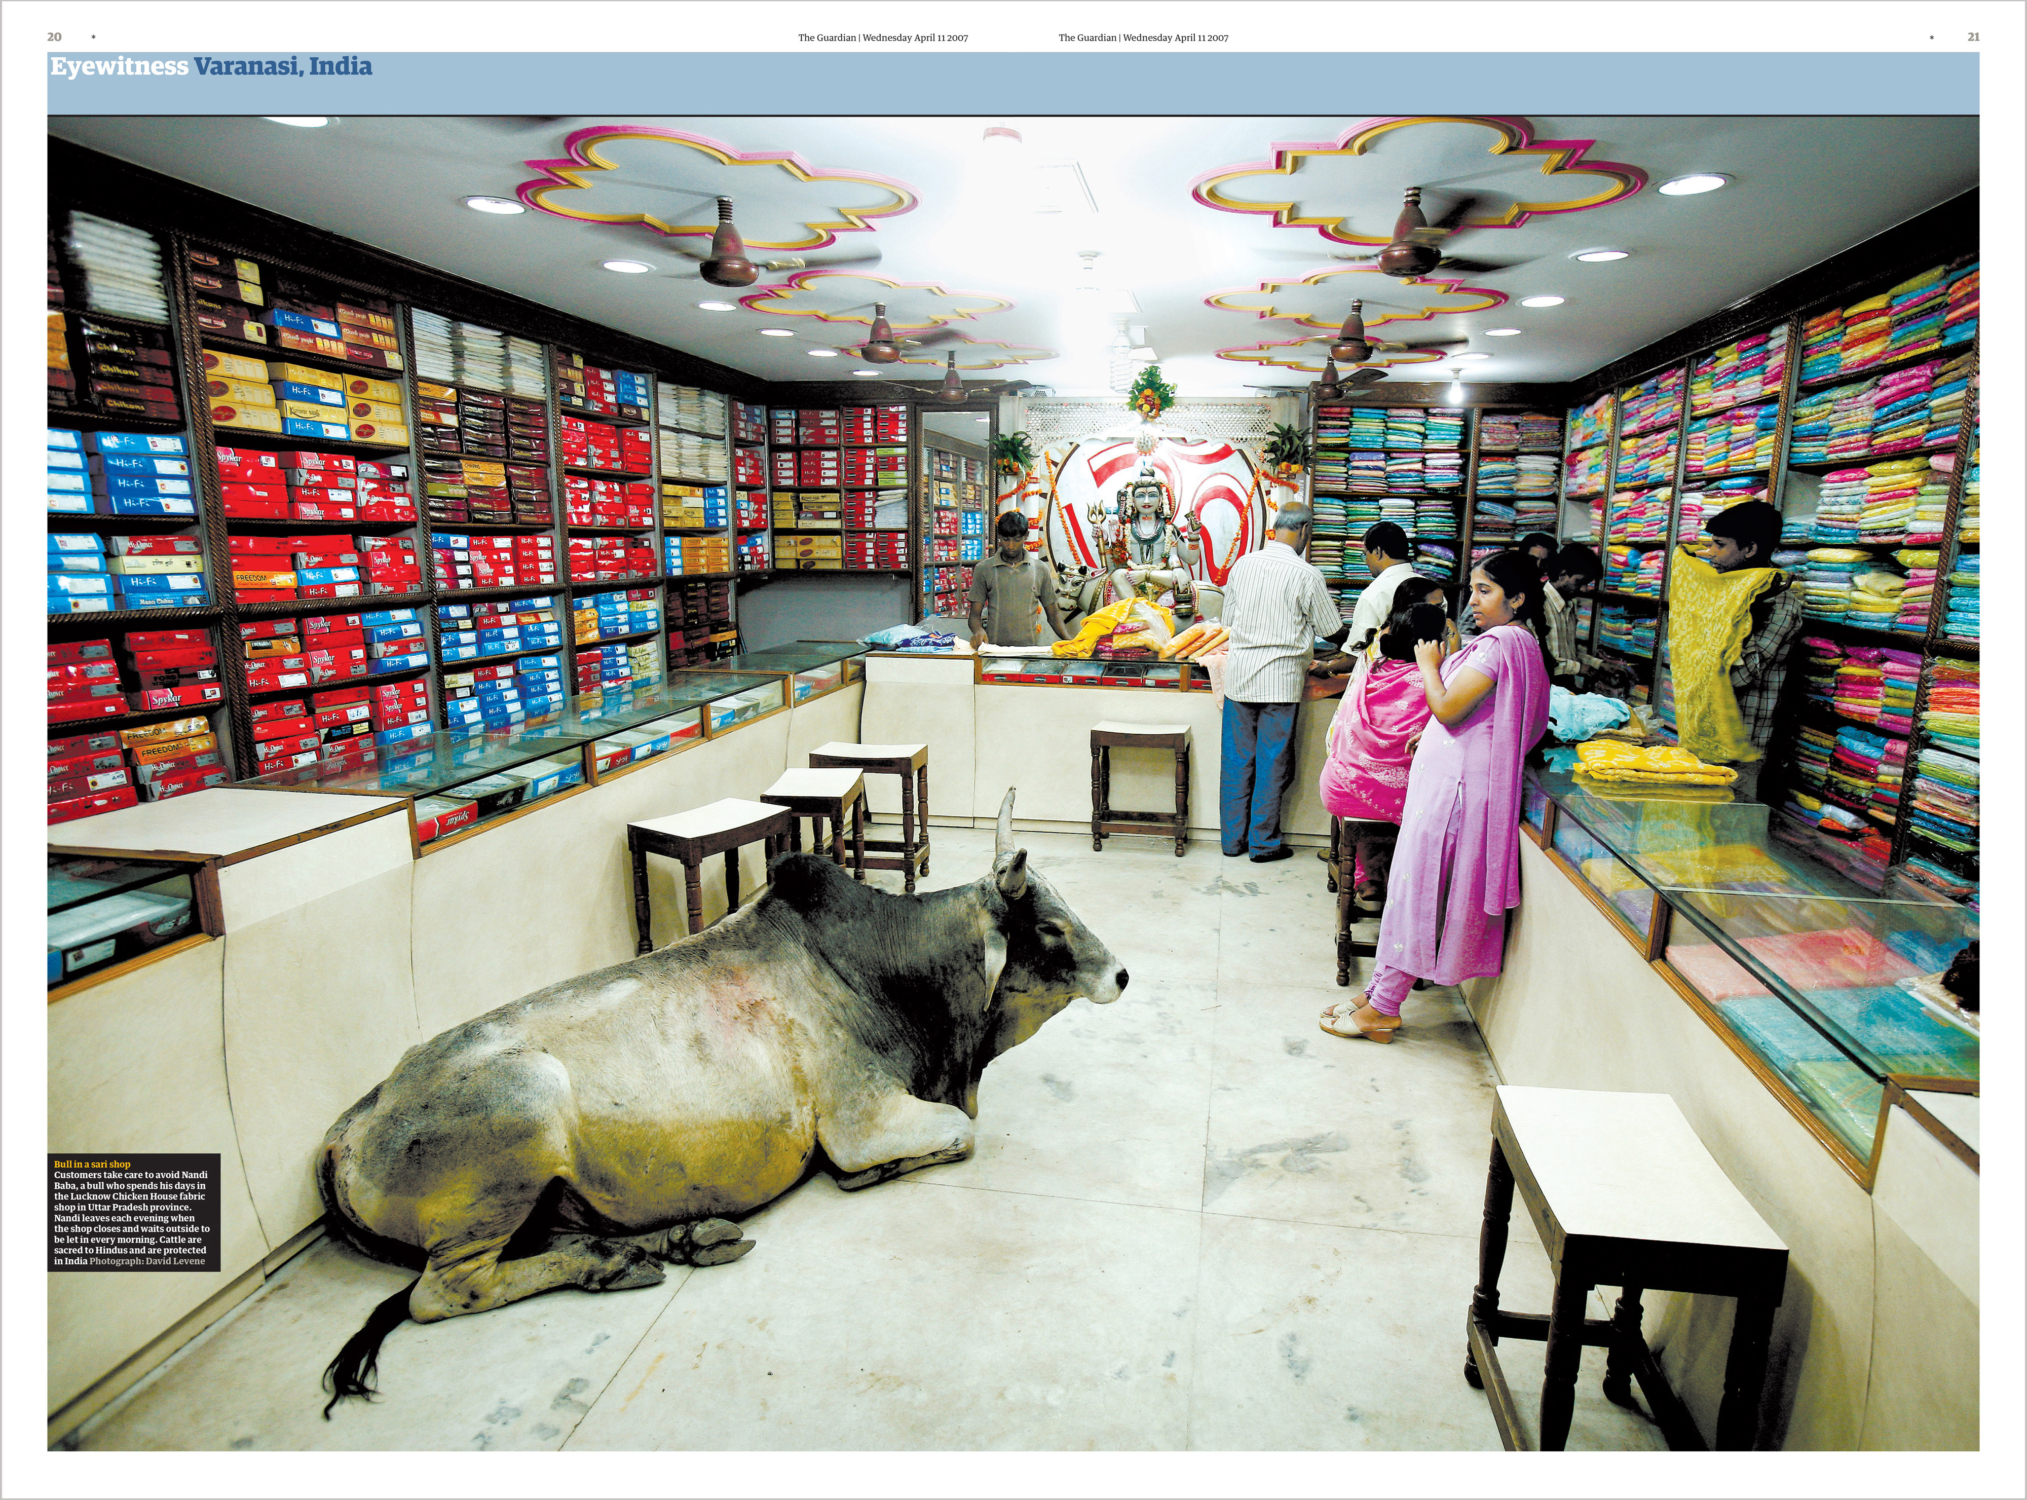 Nandi Baba, Varanasi, India, David Levene Photography